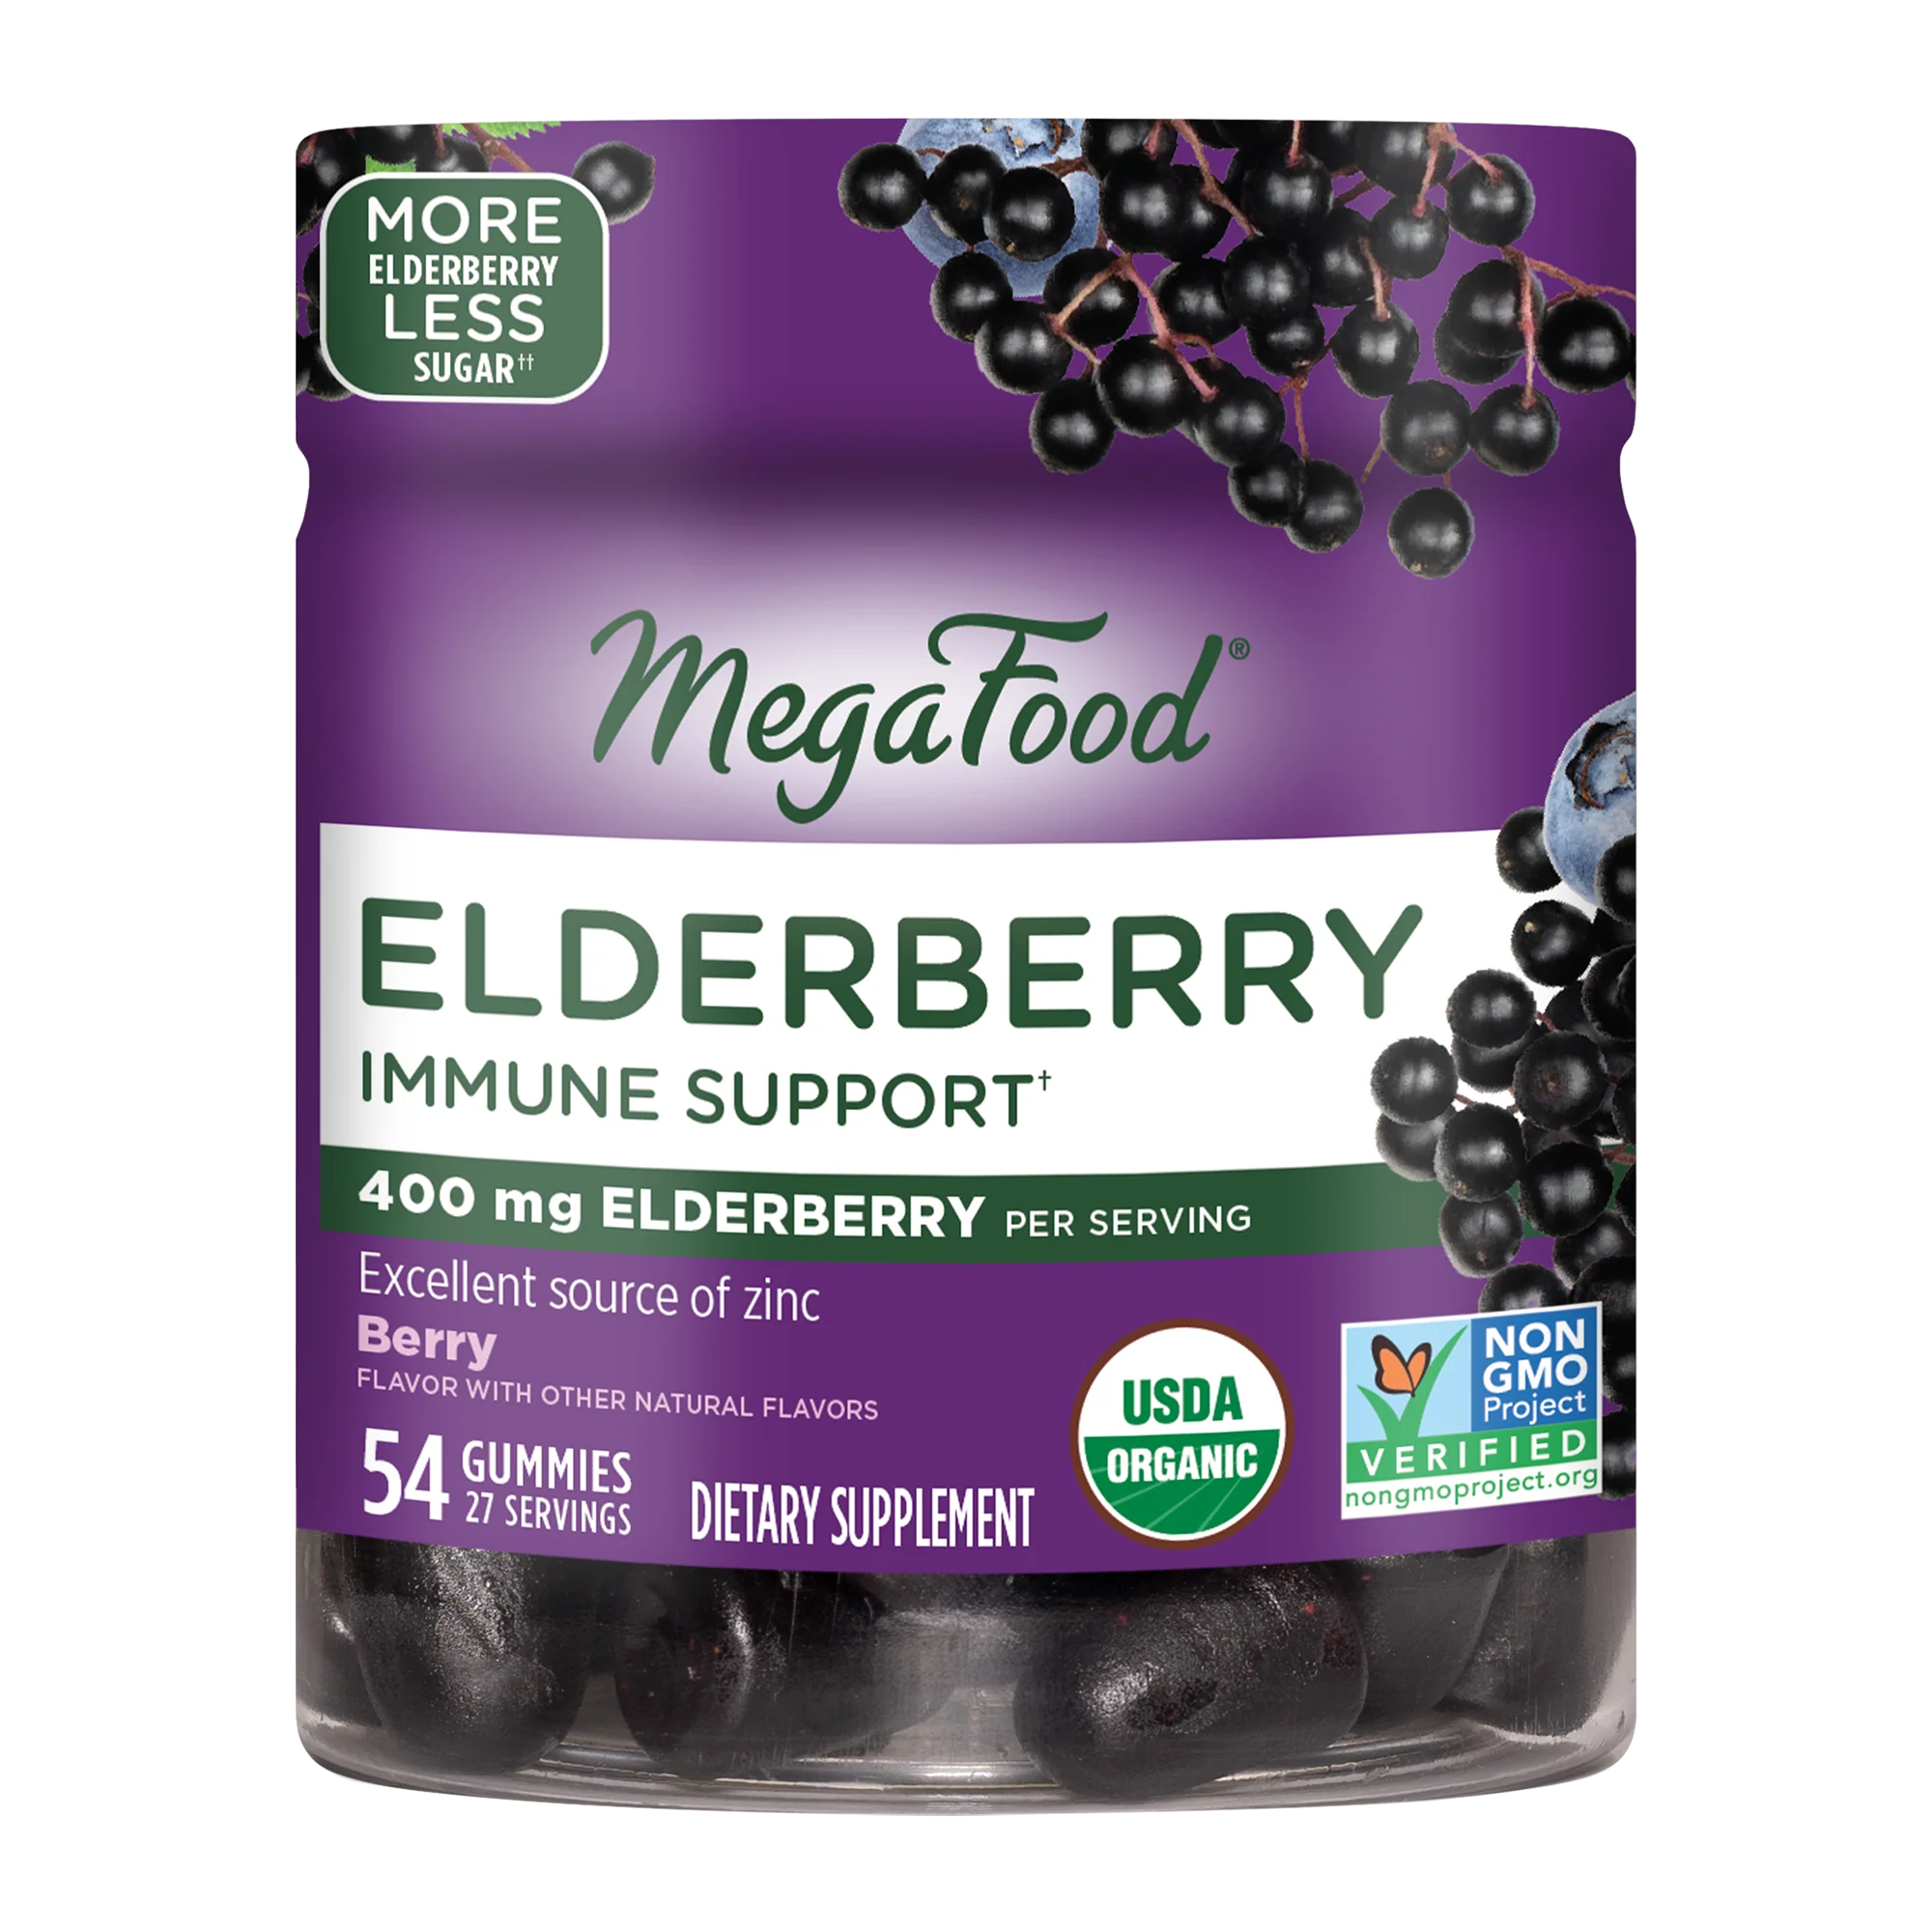 Elderberry Immune Support